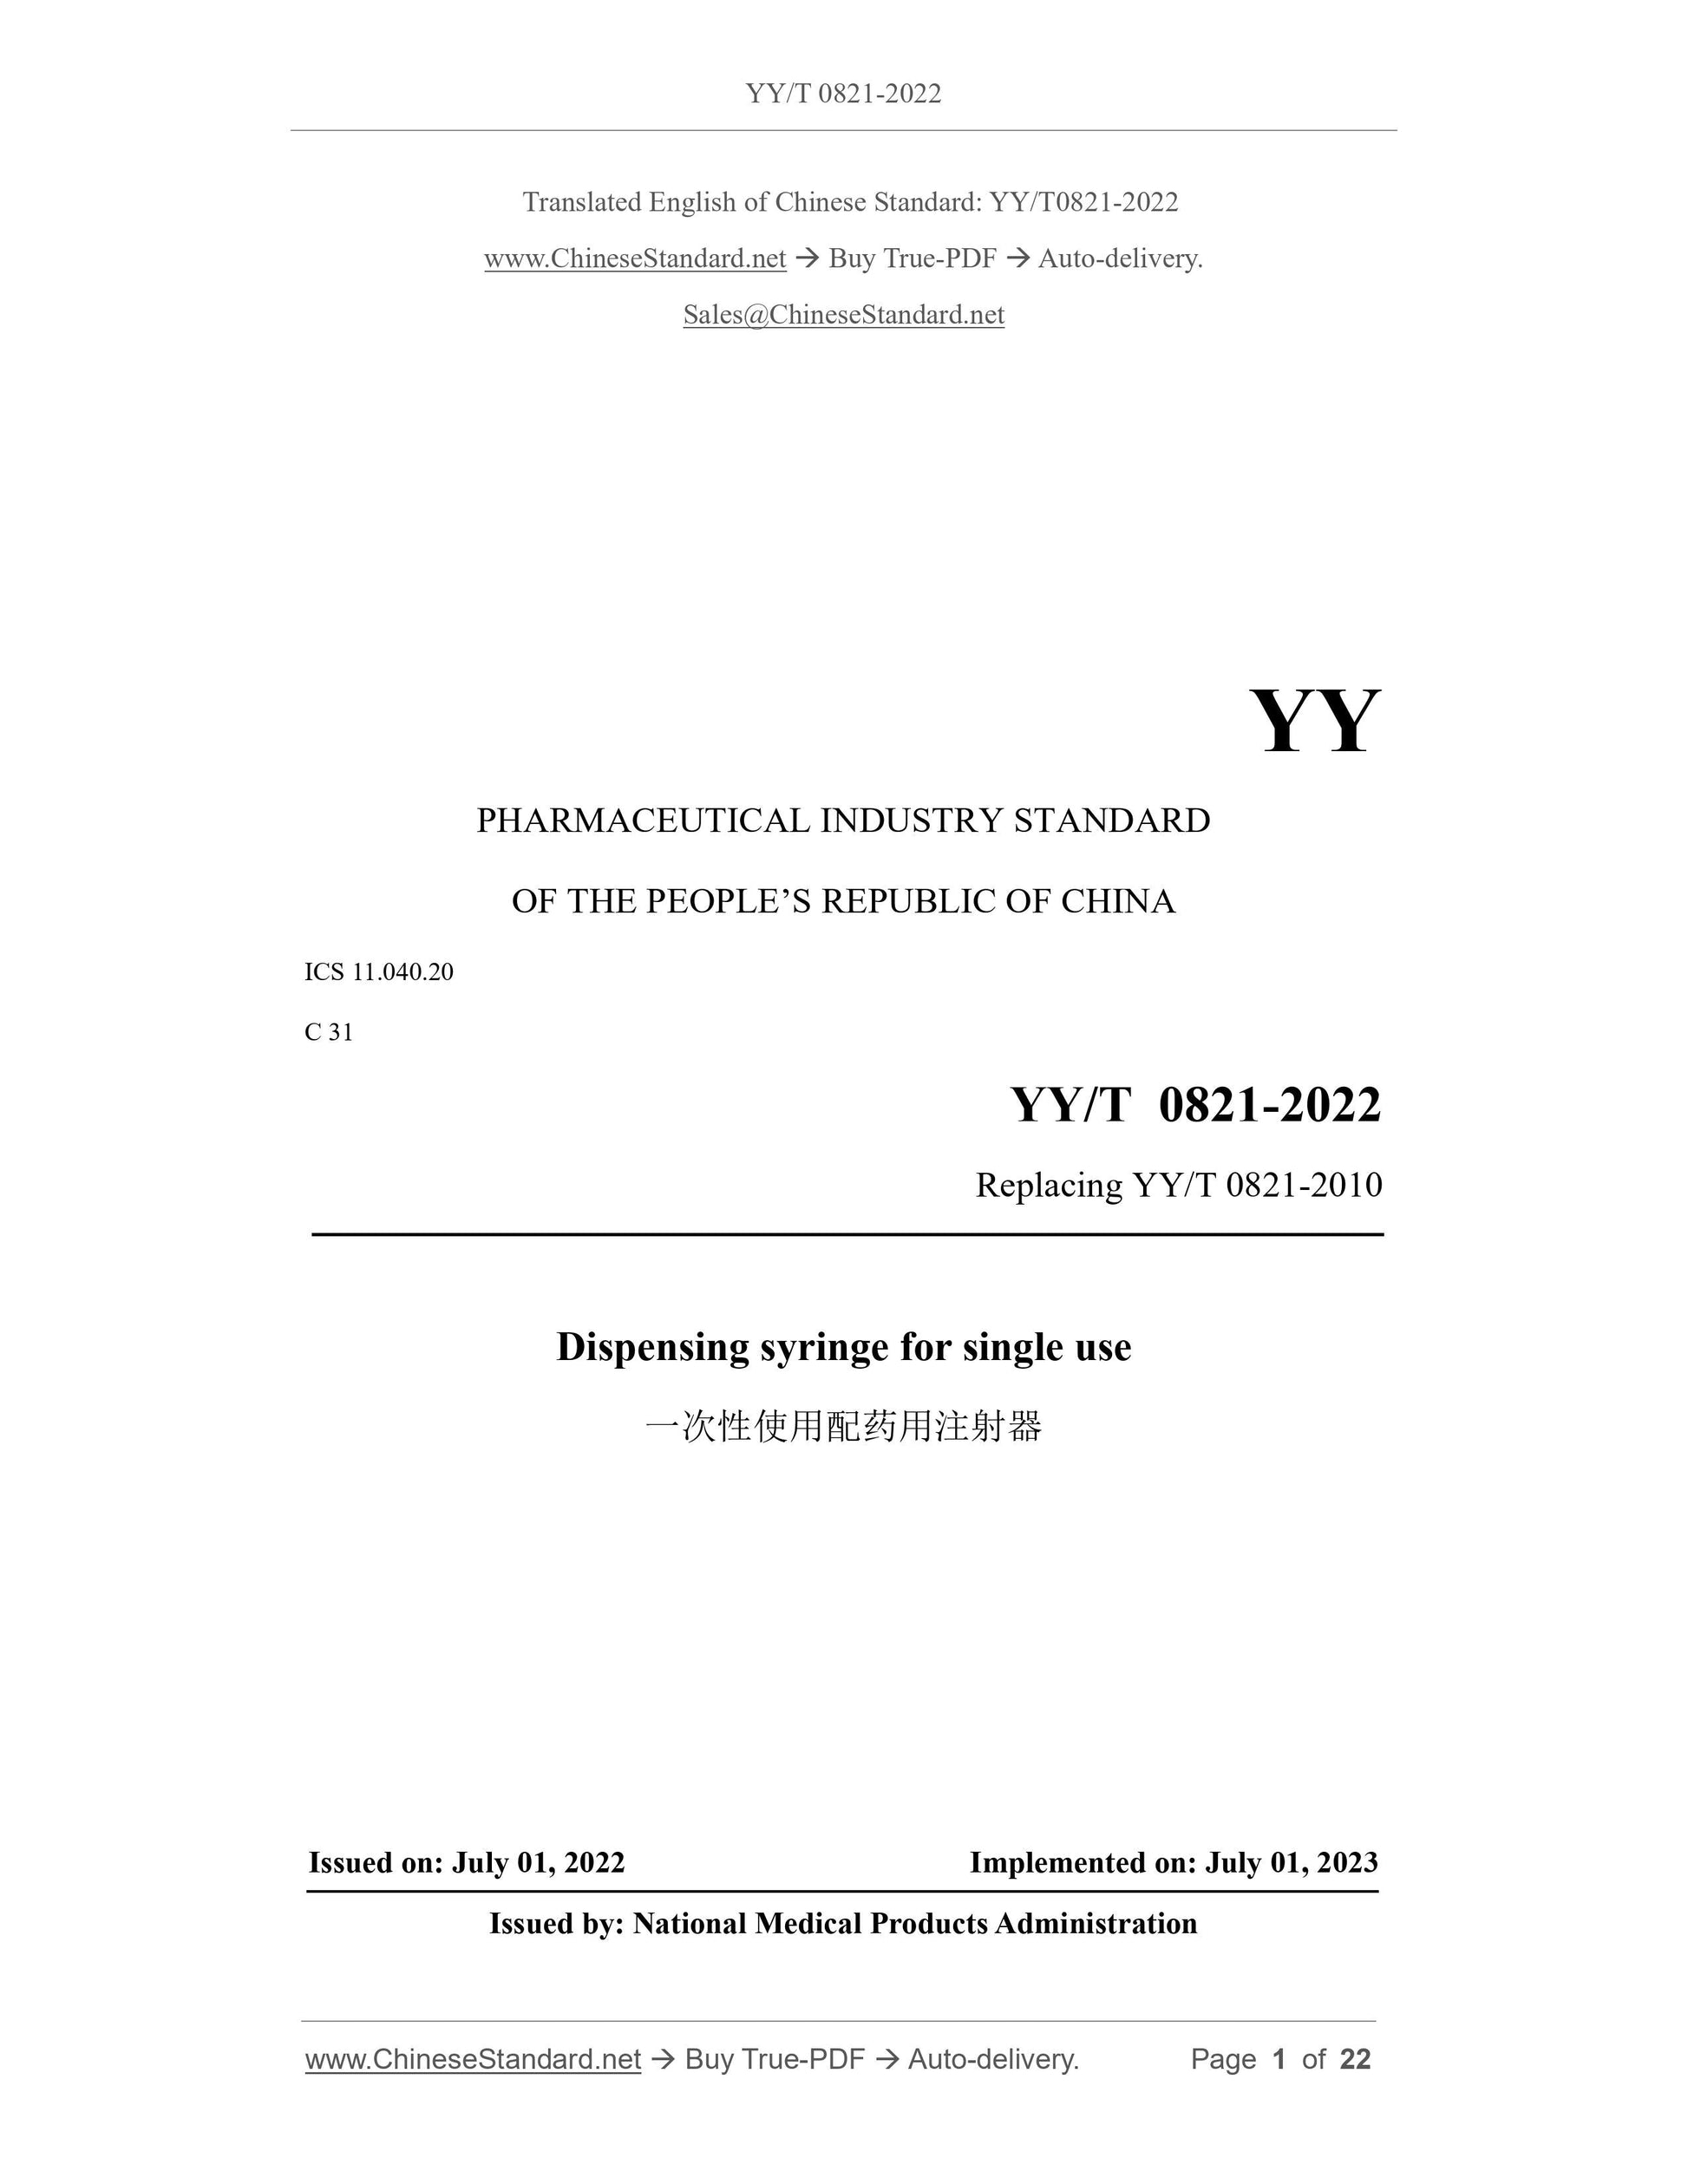 YY/T 0821-2022 Page 1